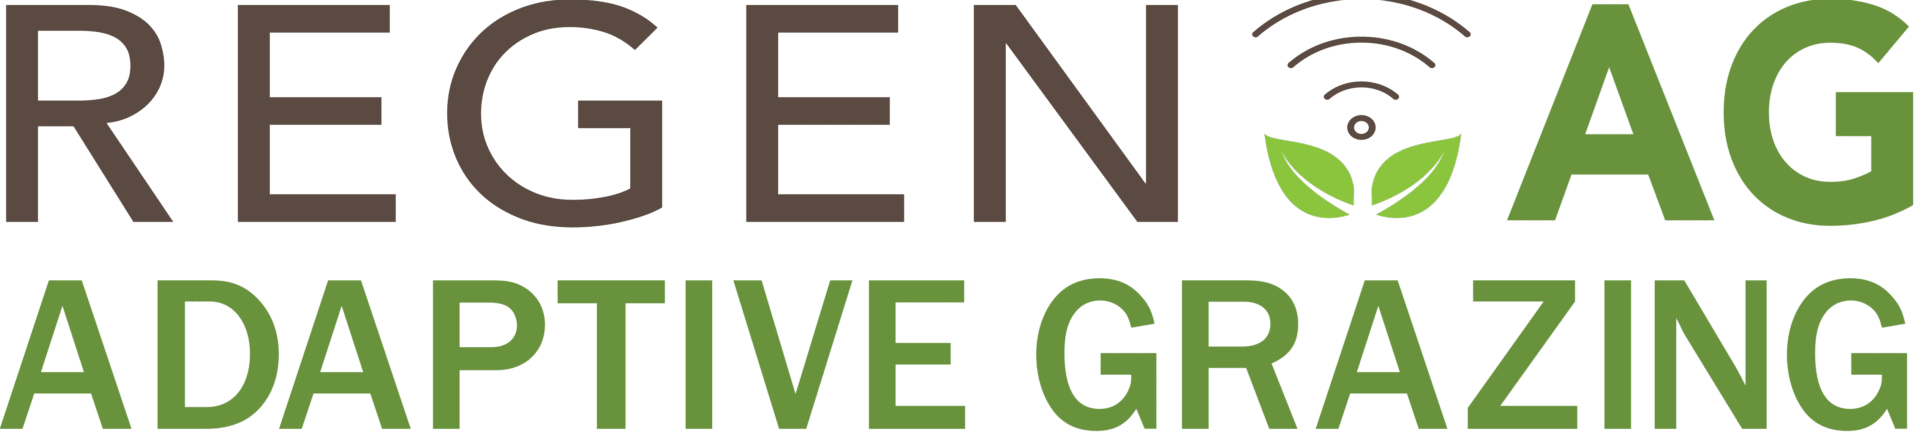 RegenAg Adaptive Grazing Logo